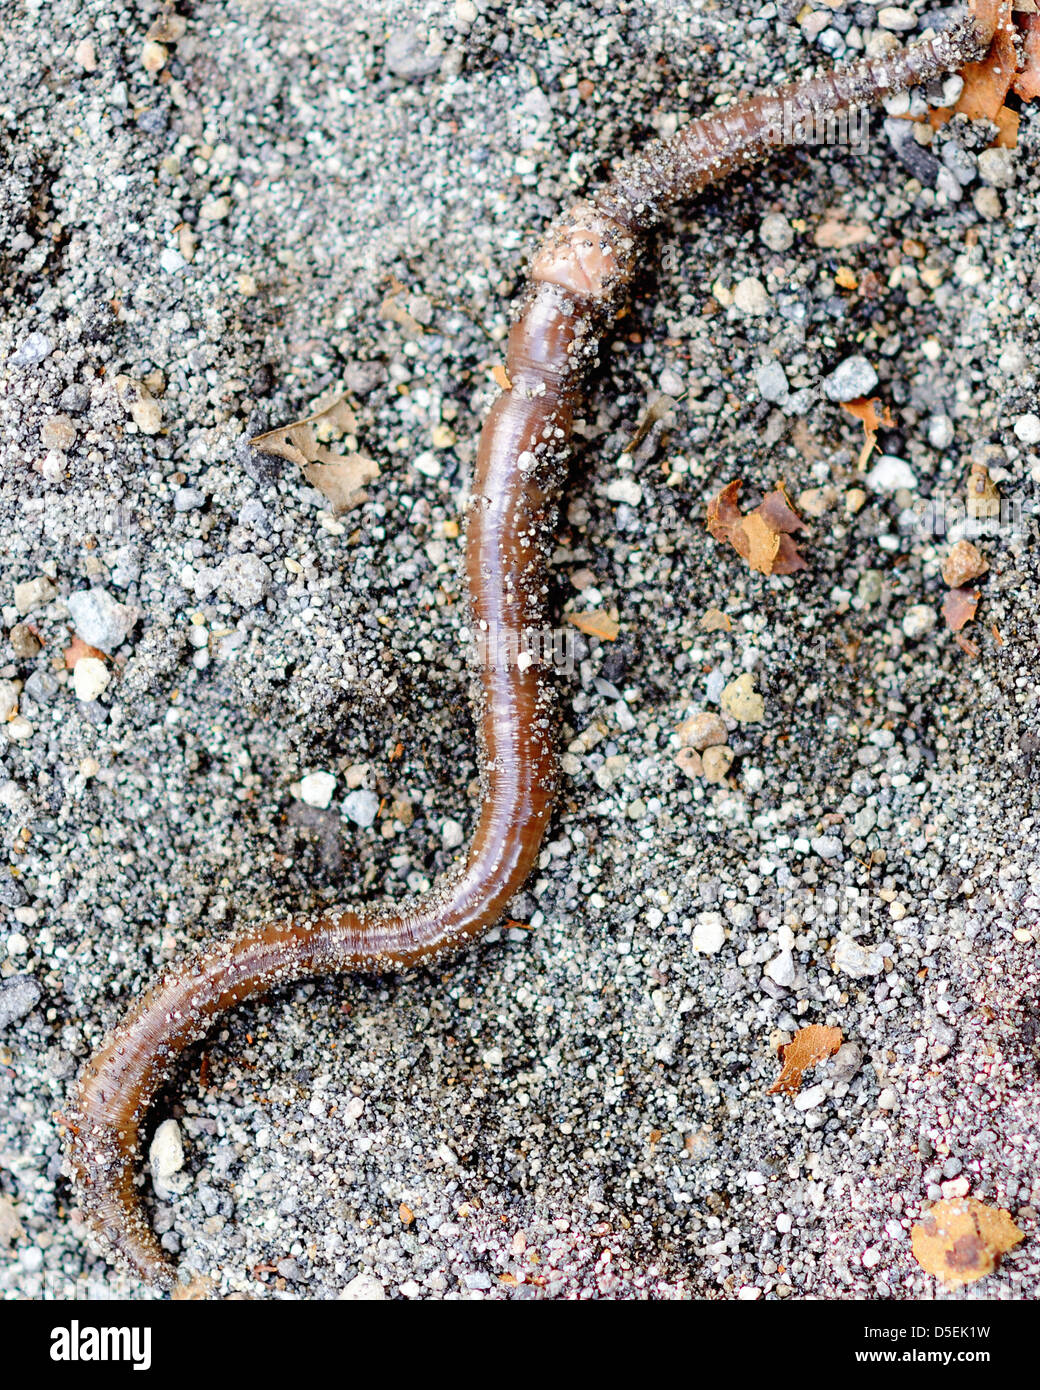 earthworm in gravel Stock Photo